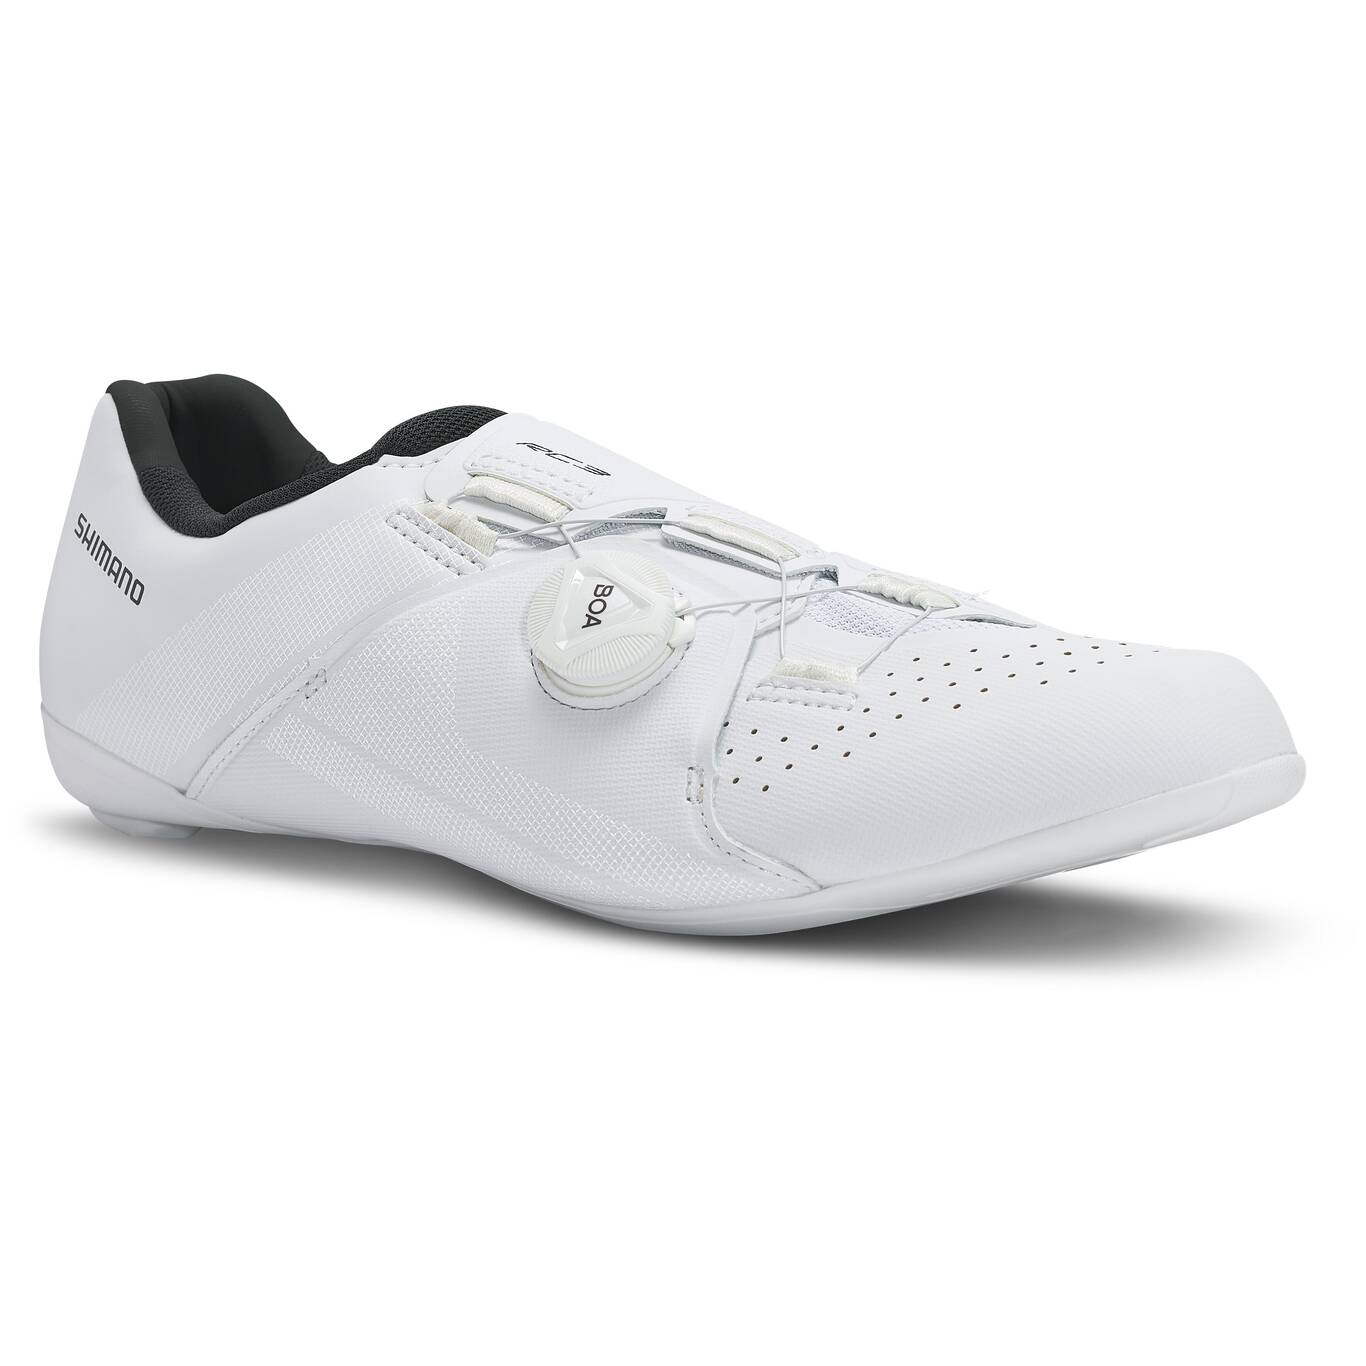 Shimano Road Bike Shoes RC3 White - Wide